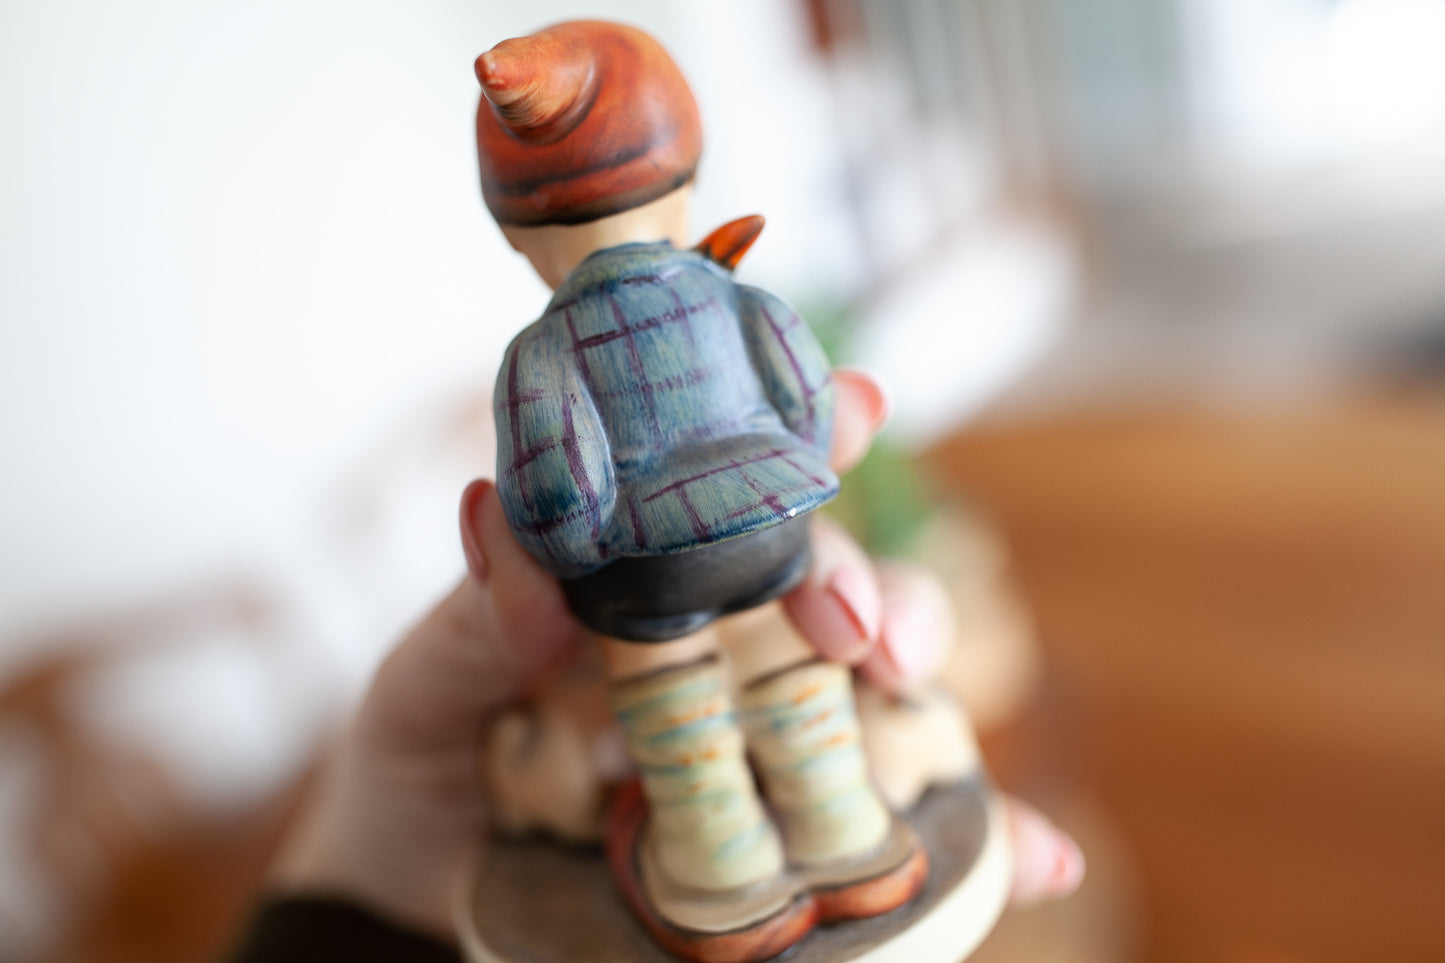 Vintage Hummel -"Farm Boy" Goebel Hummel Figurine #66 - Little Boy With Piglets